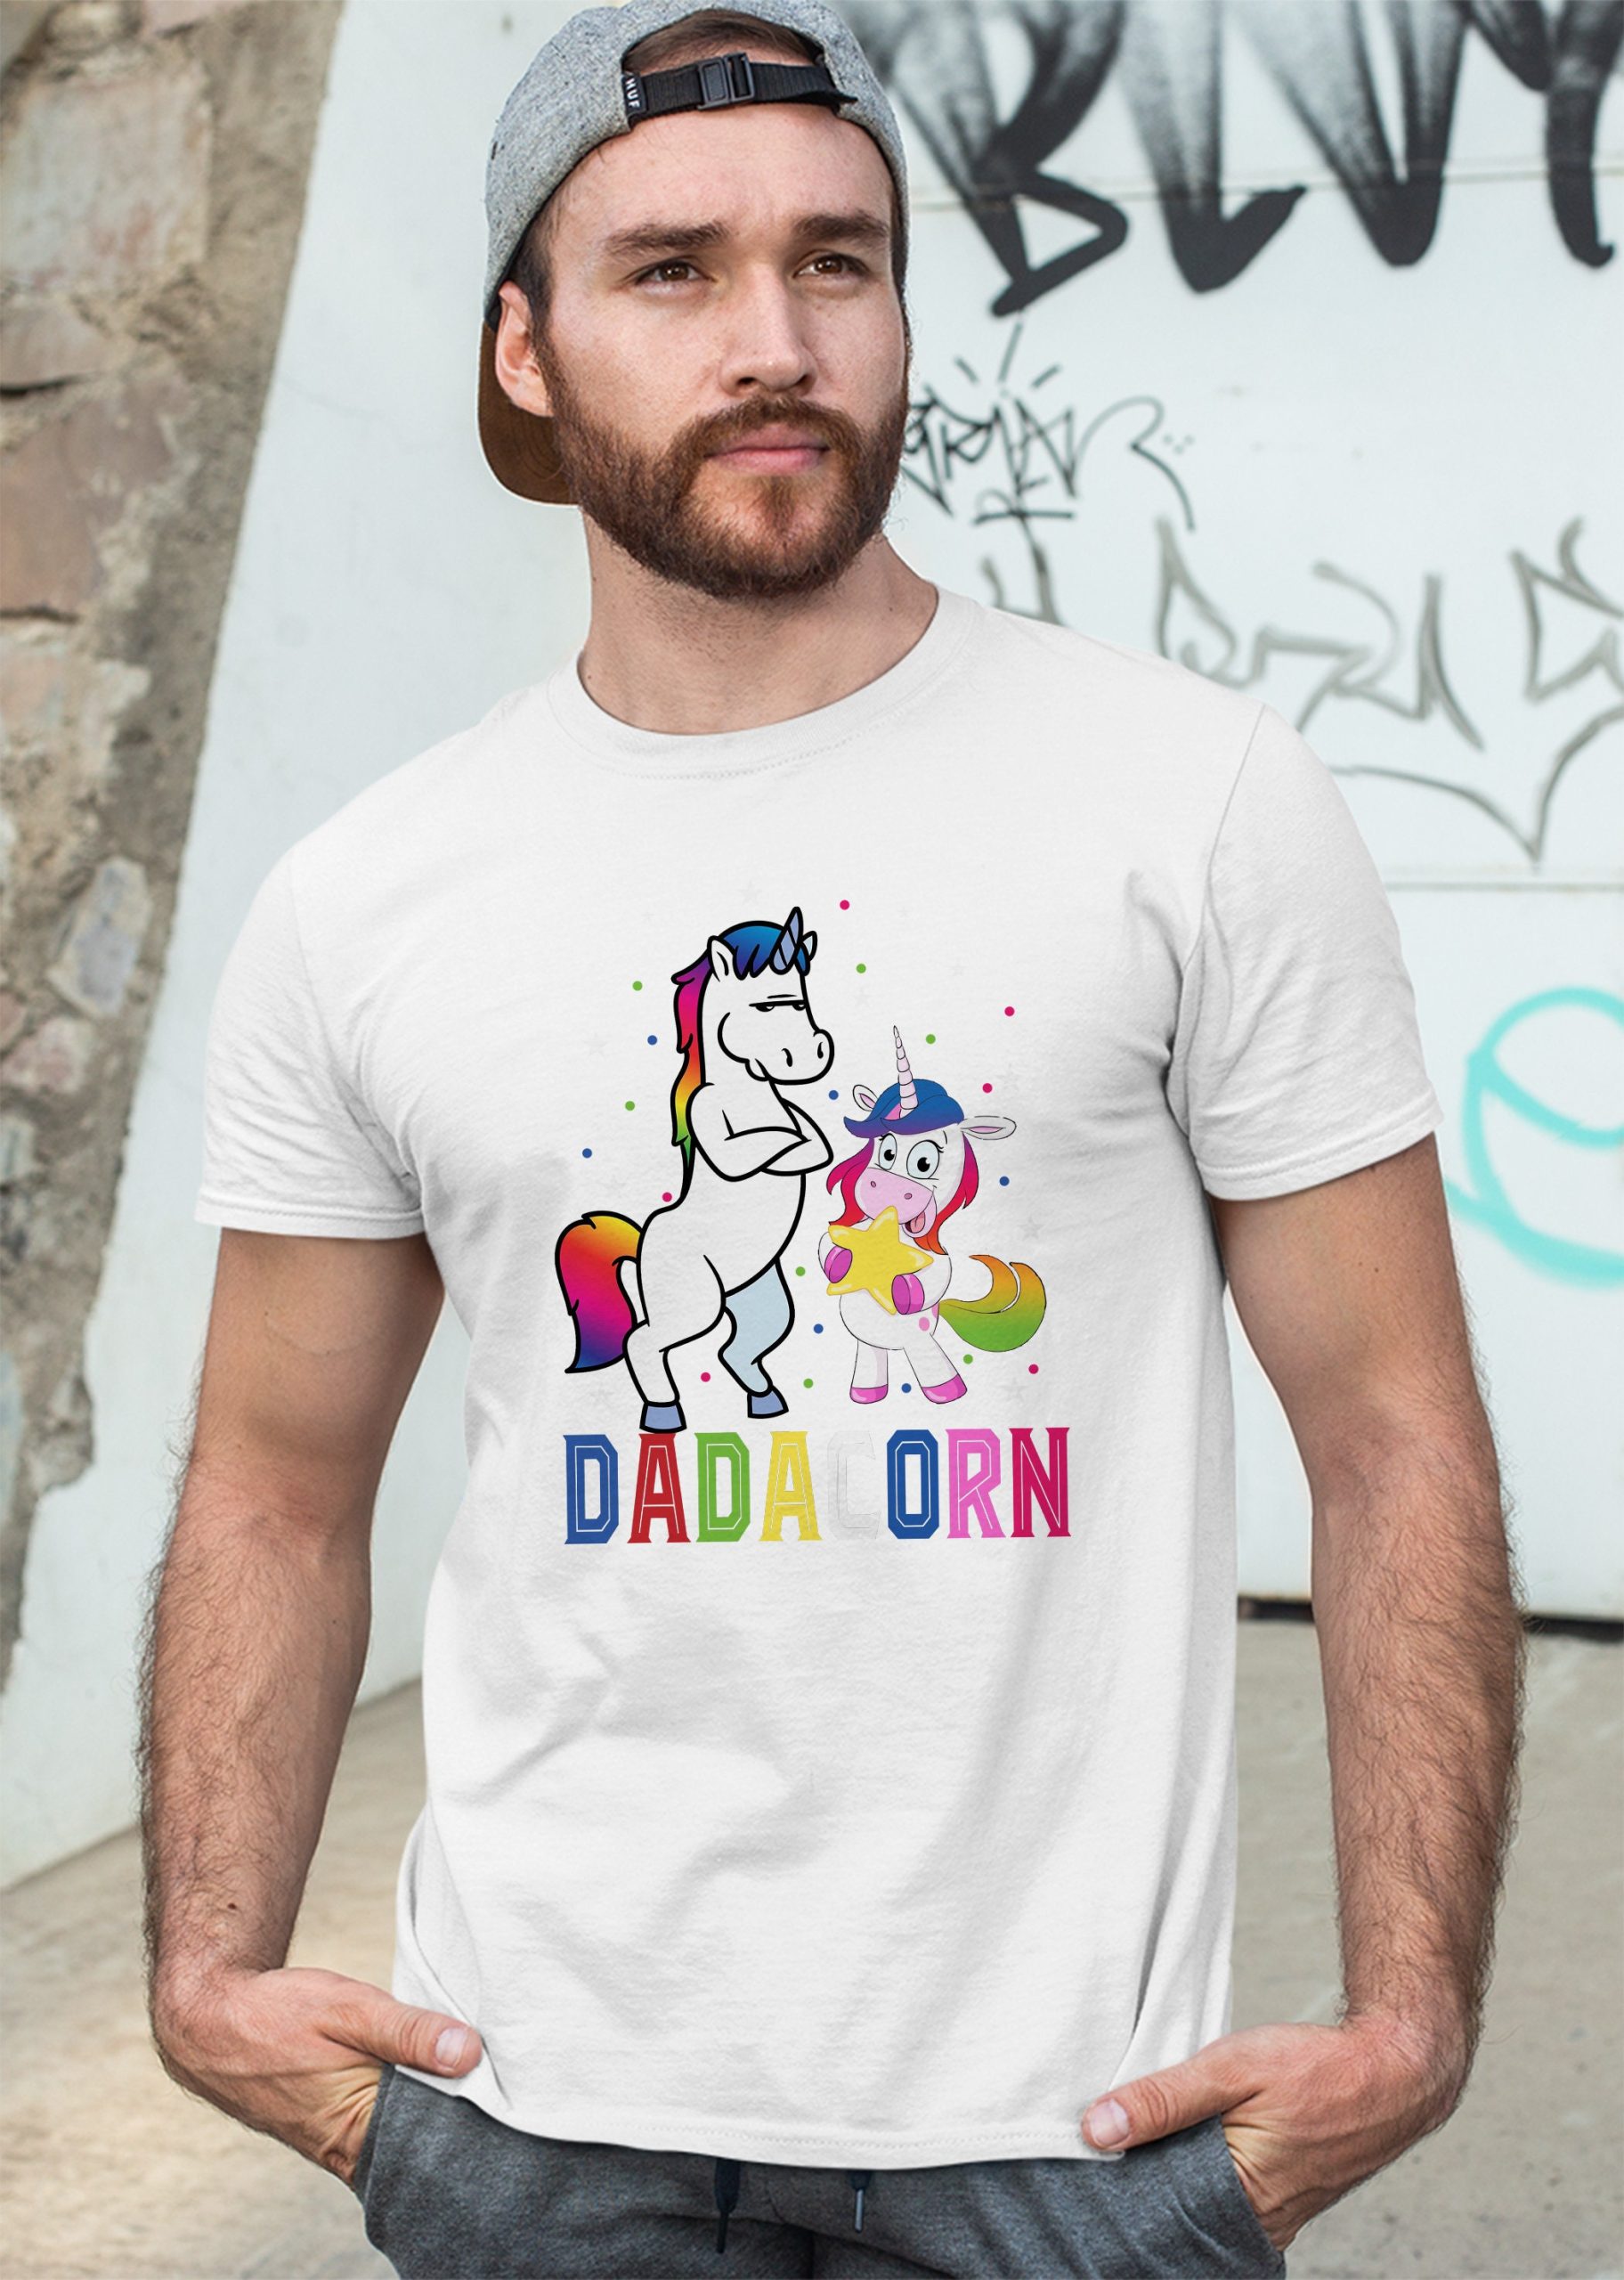 Dadacorn Cool Unicorn Father's Day Unisex T-Shirt